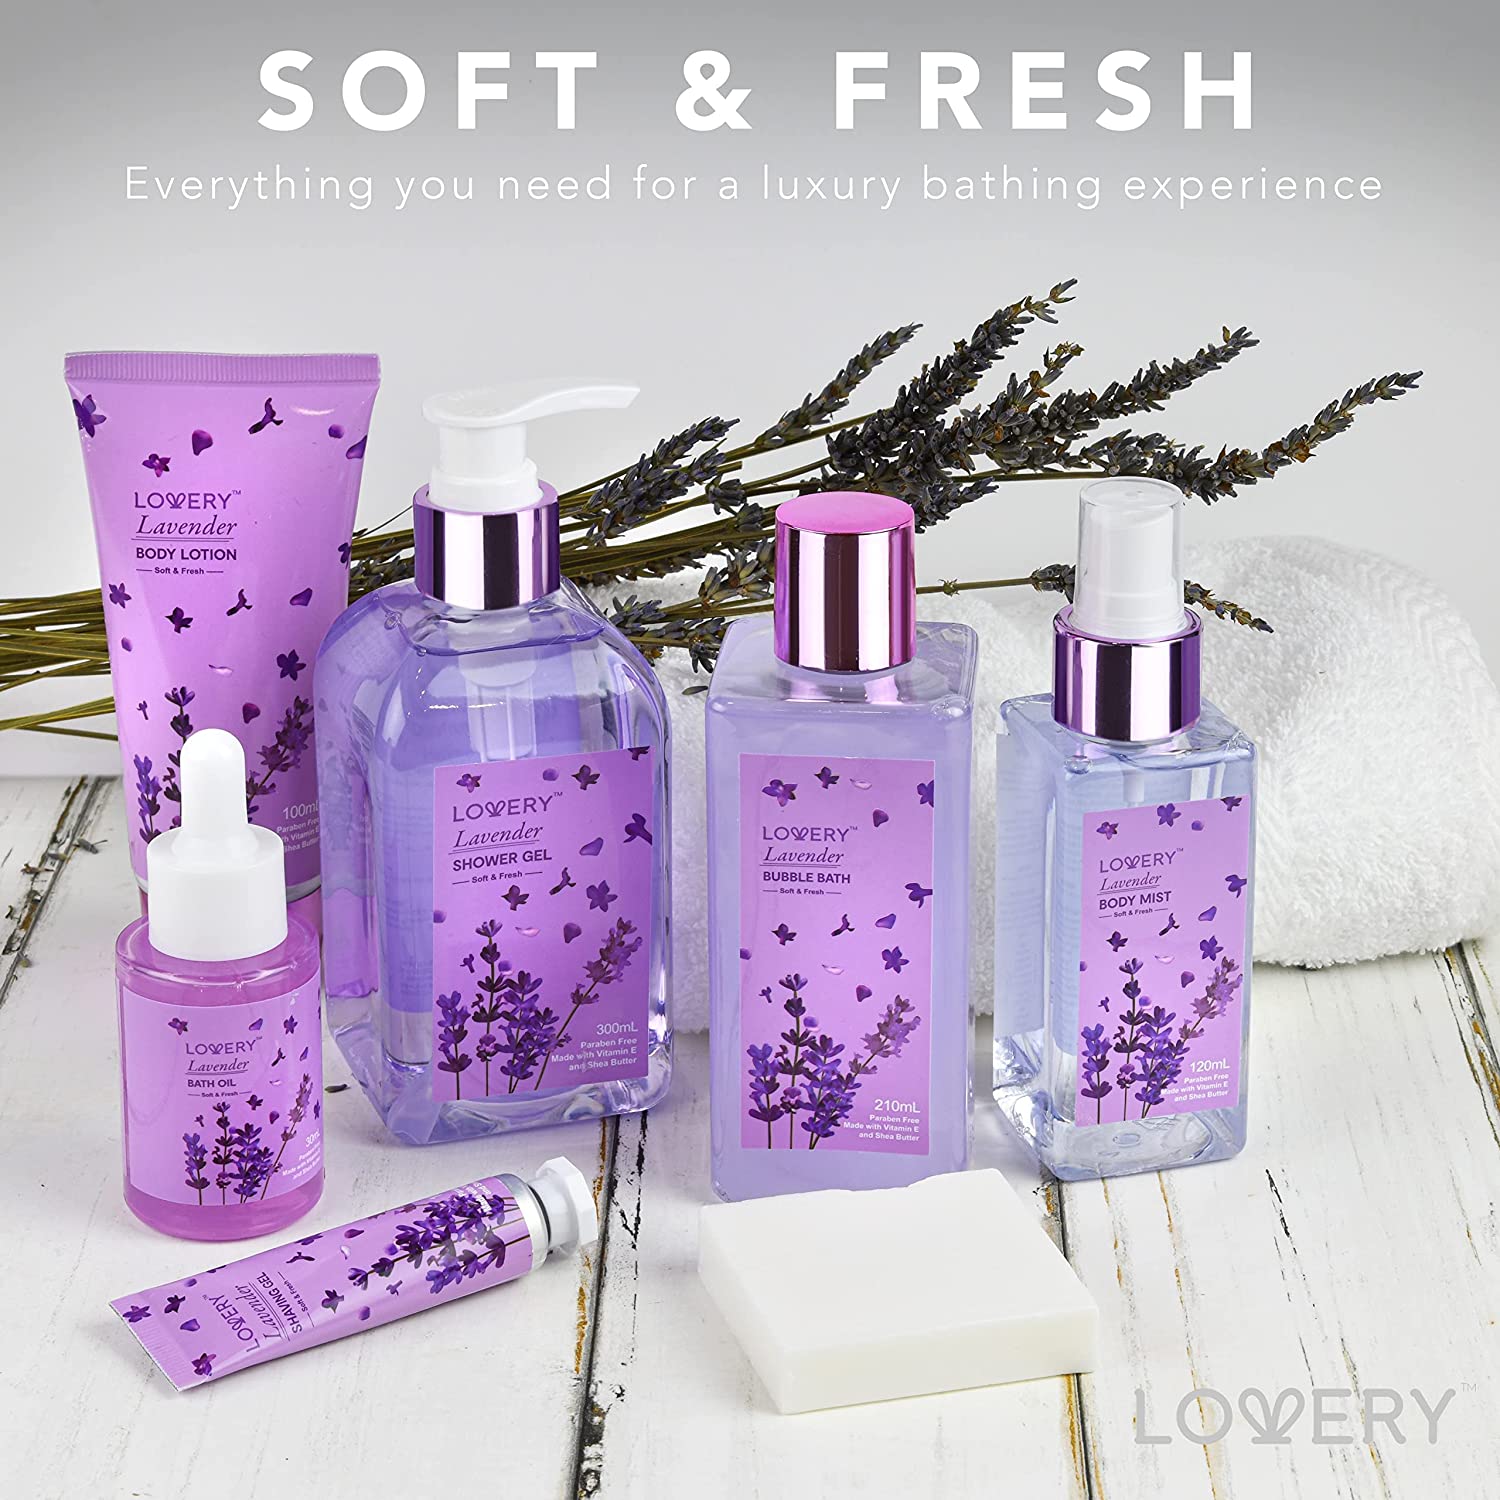 Lovery Luxury Bath Gift Set, 18pc French Lavender Relaxation Spa Gift Basket for Women & Men, Handmade Gift Box, Body Oils, Organic Lip Balm, Scented